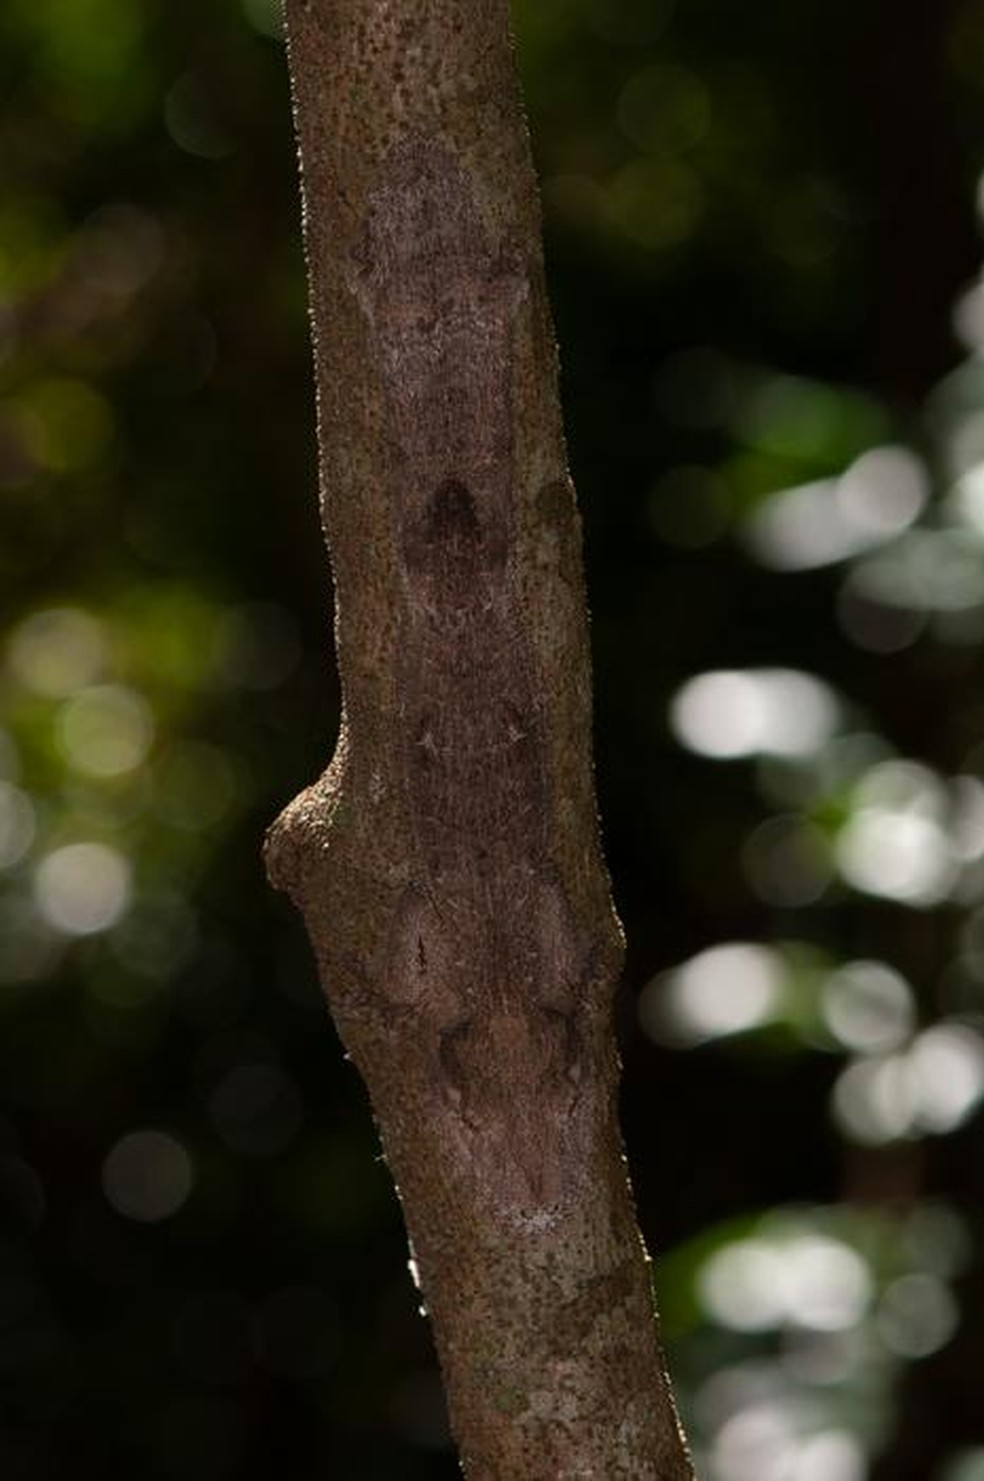 Uroplatus garamaso descansa escondido, de cabeça para baixo nos troncos das árvores, com os membros posteriores estendidos — Foto: Mark D. Scherz, Natural History Museum of Denmark